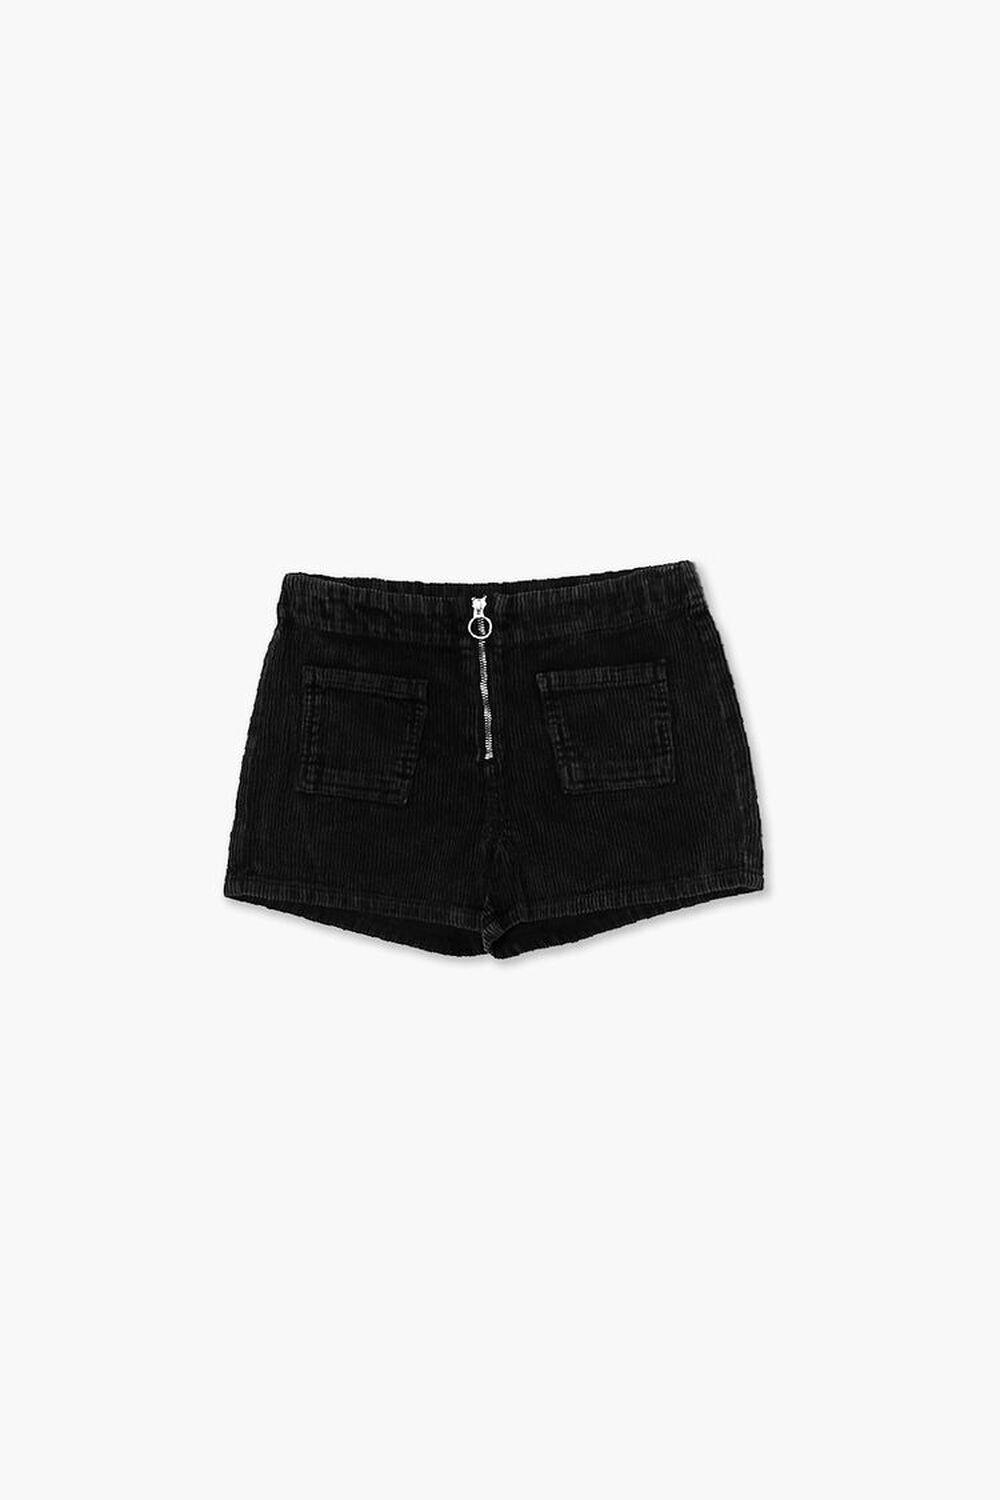 BLACK Girls Denim Pull-Ring Shorts (Kids), image 1